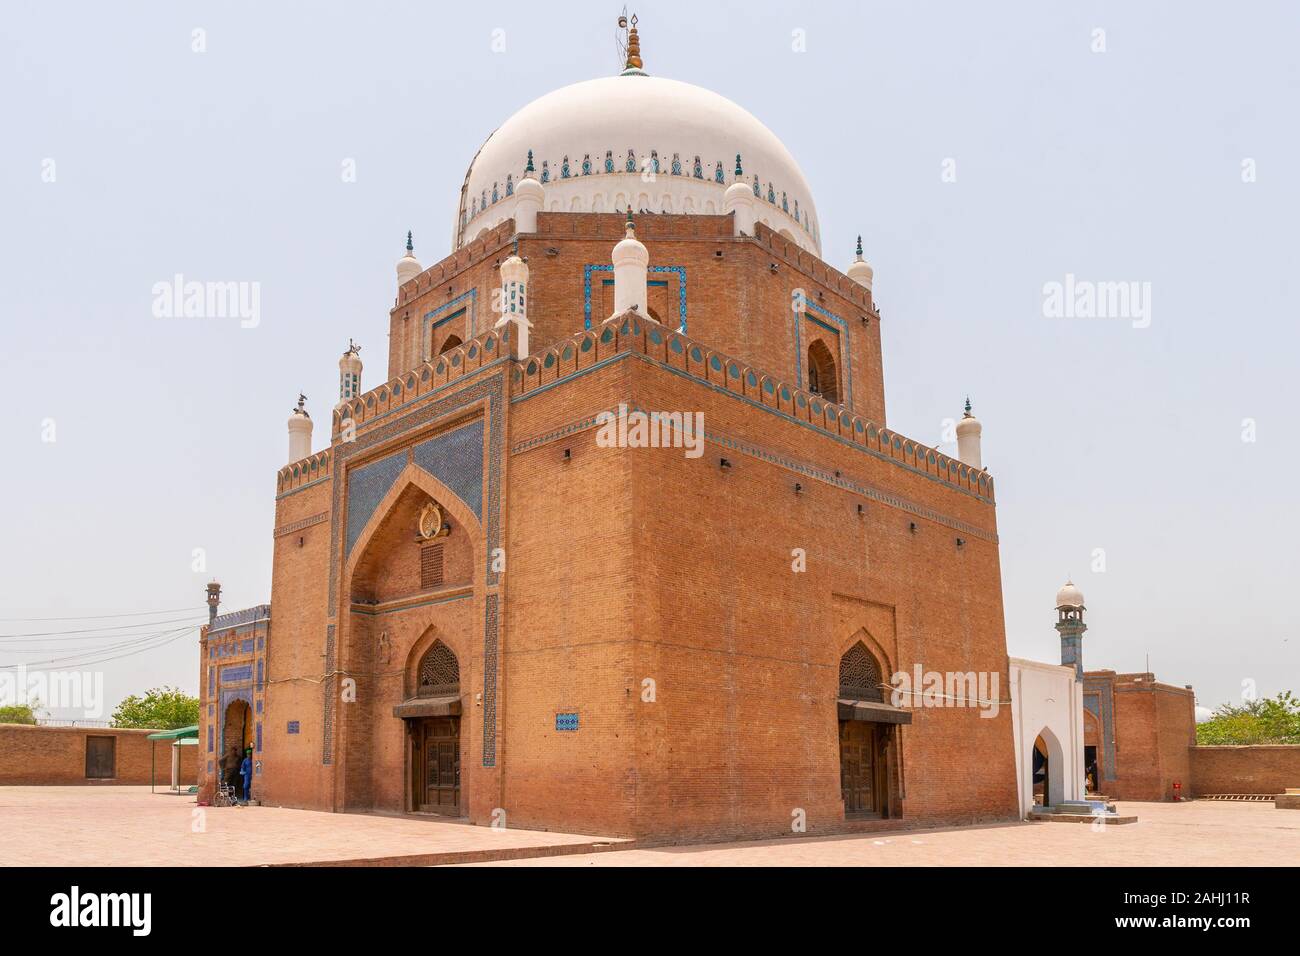 Multan Darbar Hazrat Bahauddin Zakariya Multani Tomb Picturesque View on a Sunny Blue Sky Day Stock Photo